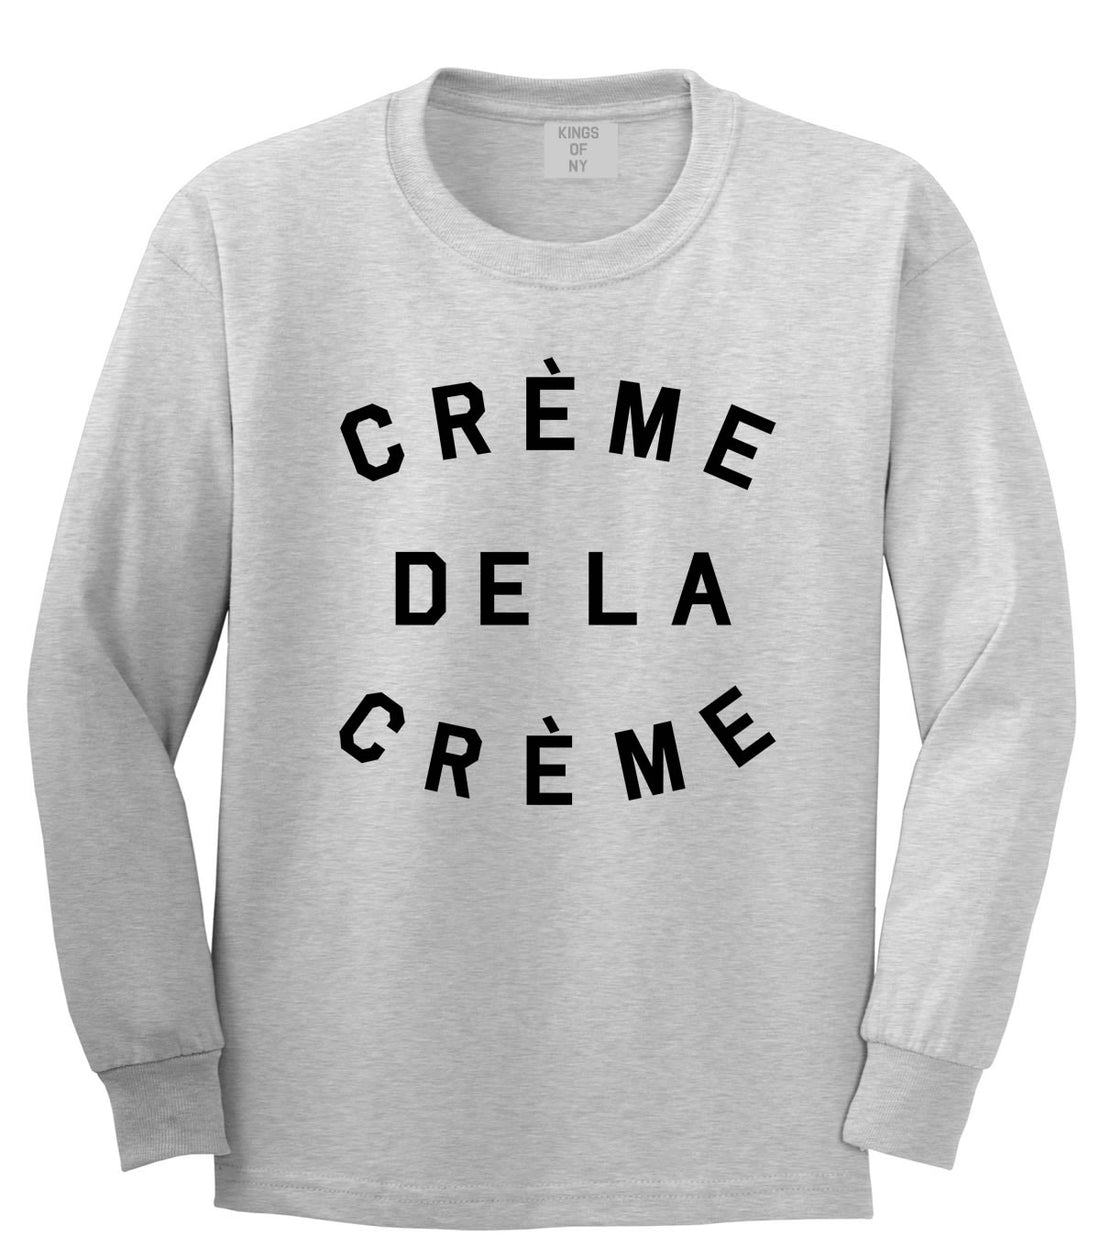 Creme De La Creme Celebrity Fashion Crop Long Sleeve Boys Kids T-Shirt In Grey by Kings Of NY